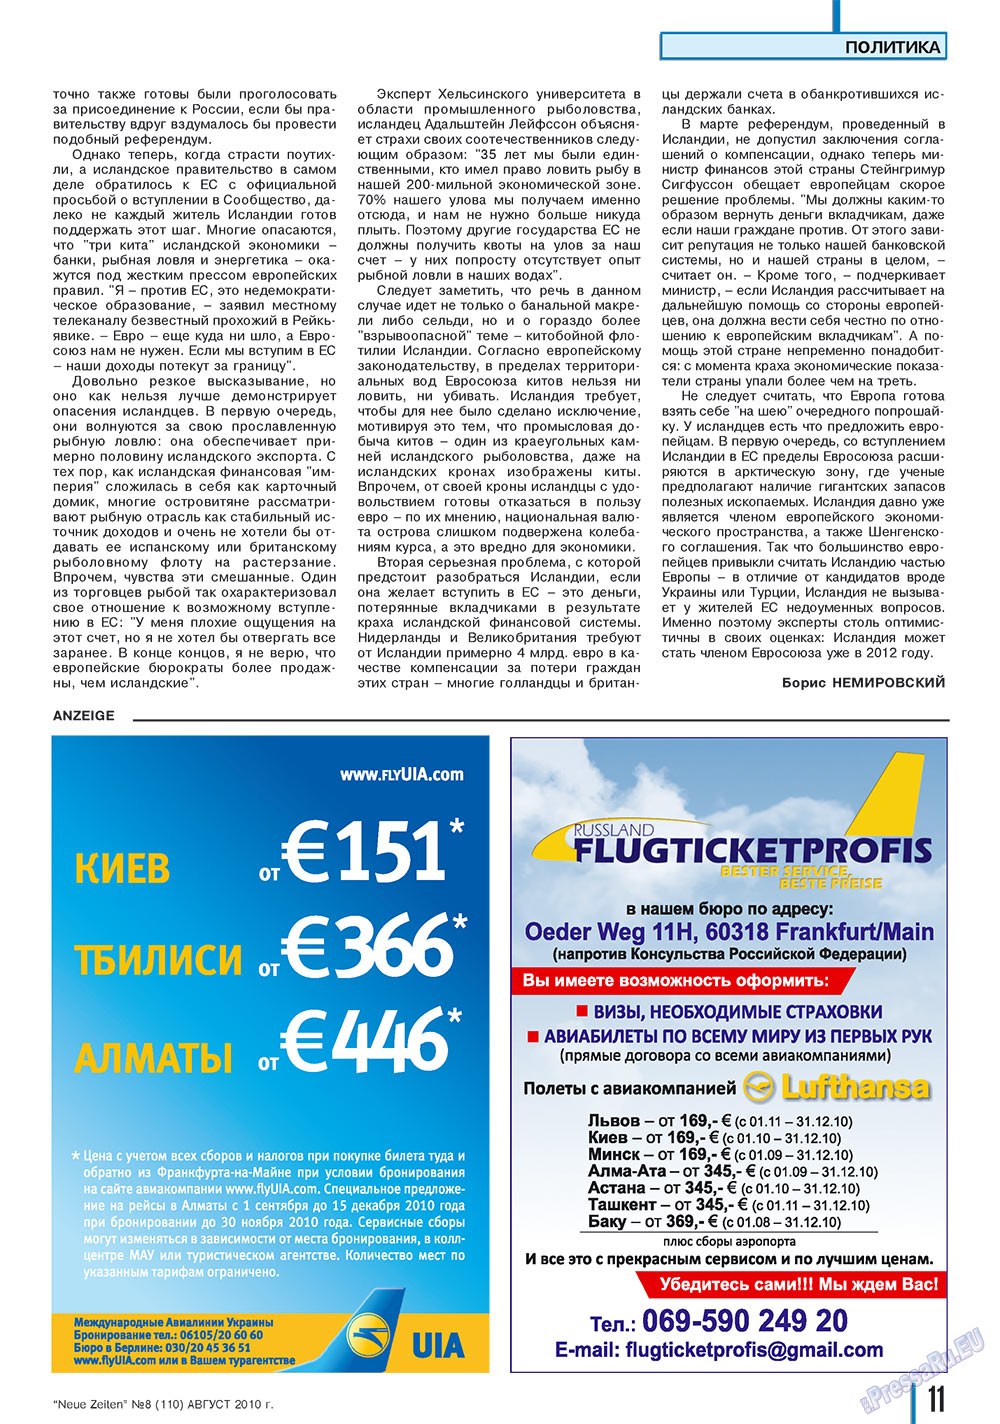 Neue Zeiten (журнал). 2010 год, номер 8, стр. 11